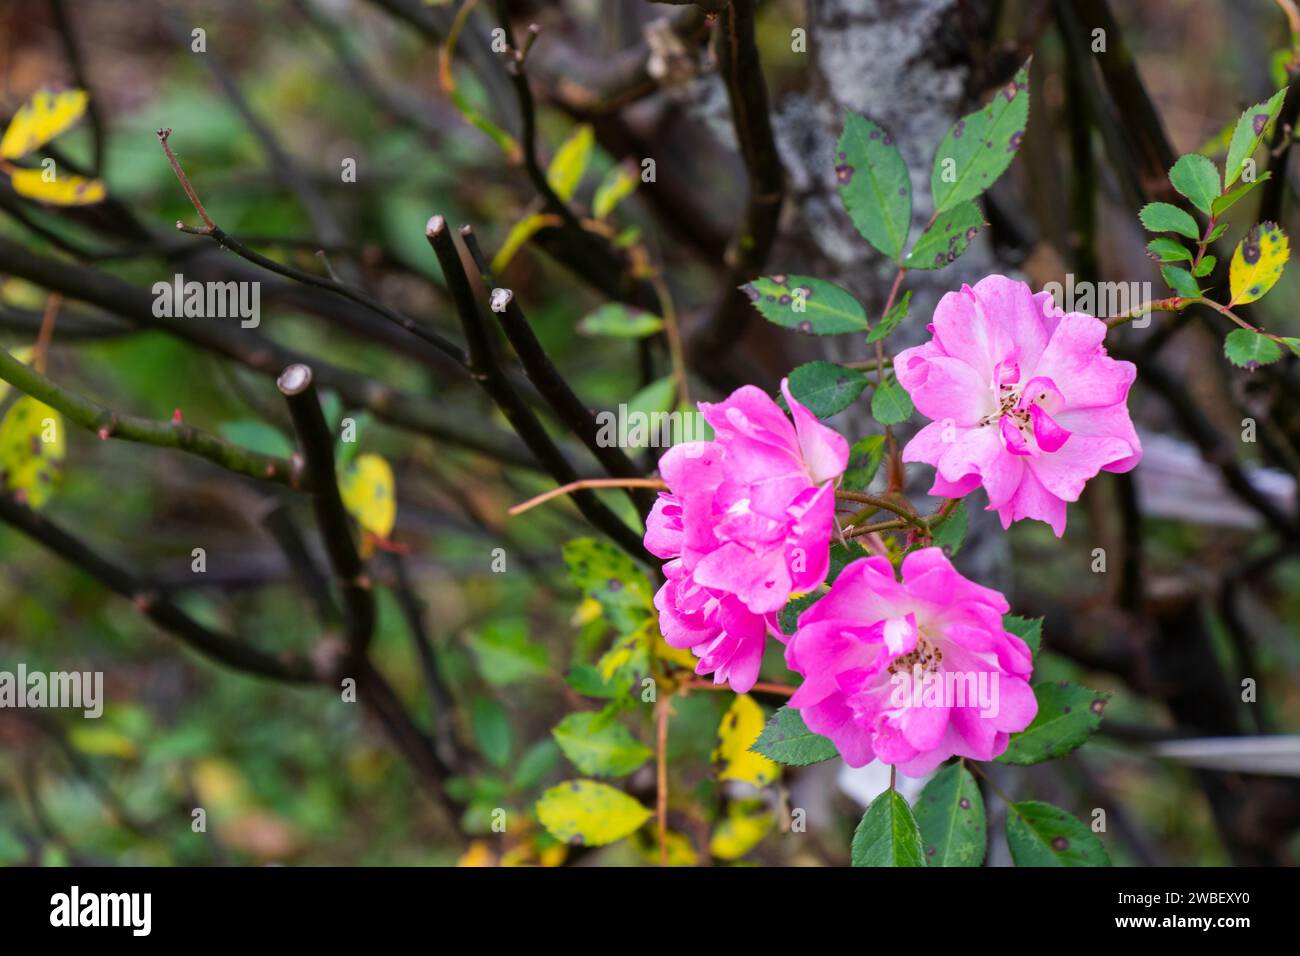 A close-up shot of vibrant wild pink roses nestled among lush, dark green foliage Stock Photo